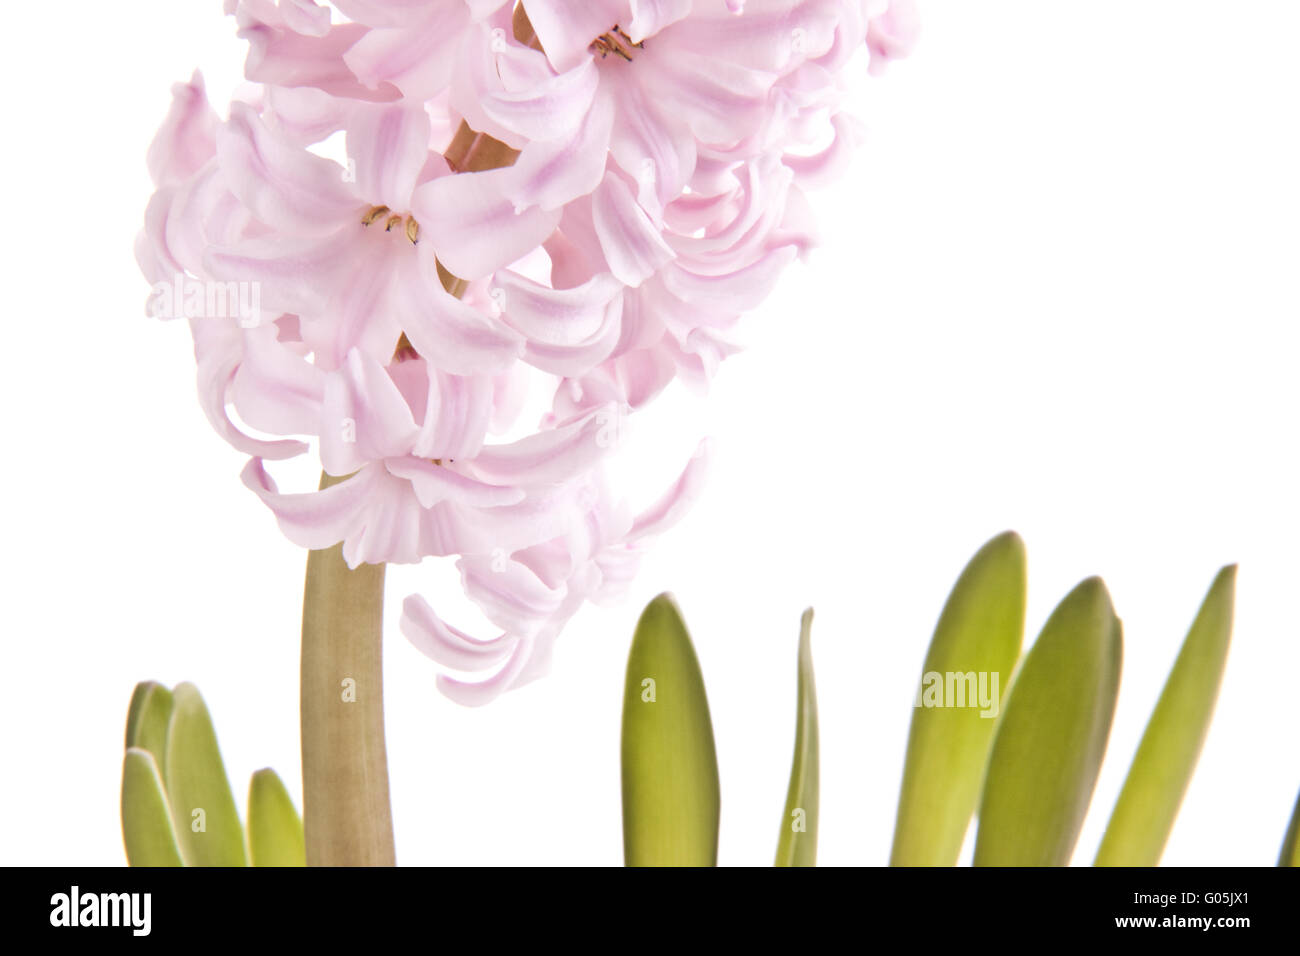 Pink hyacinth (hyacinthus orientalis) close up Stock Photo